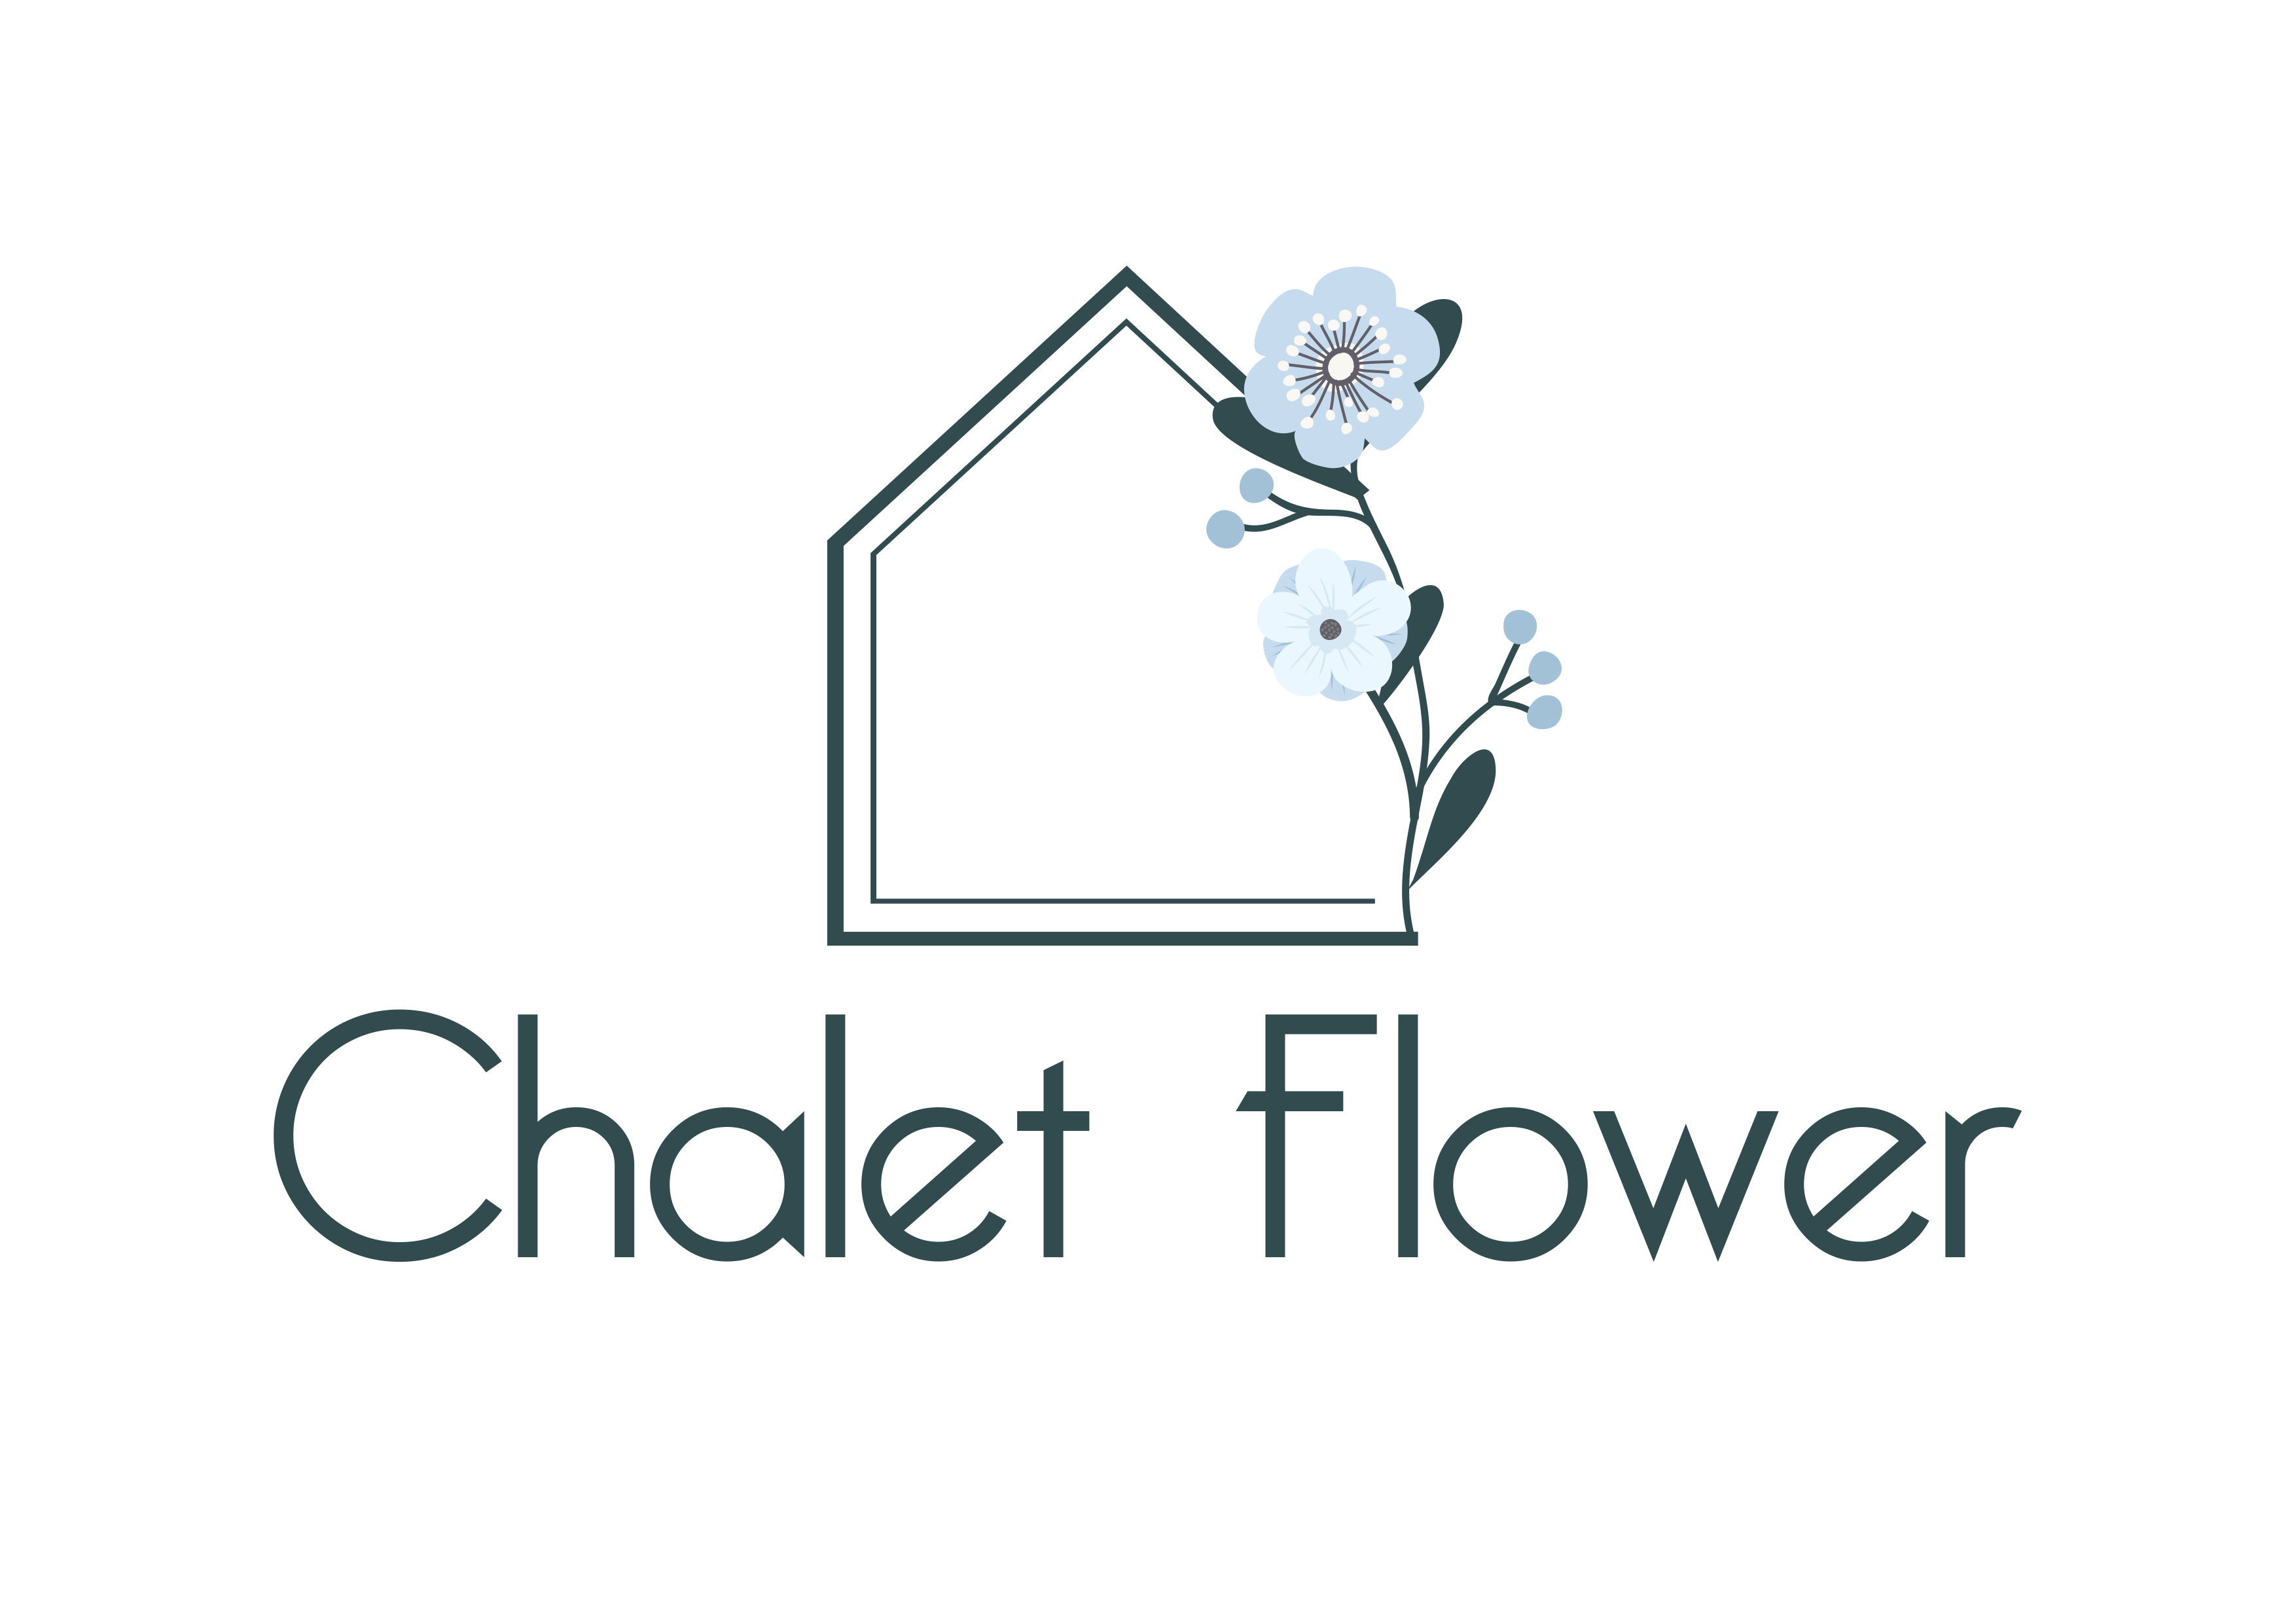 Chalet Flower